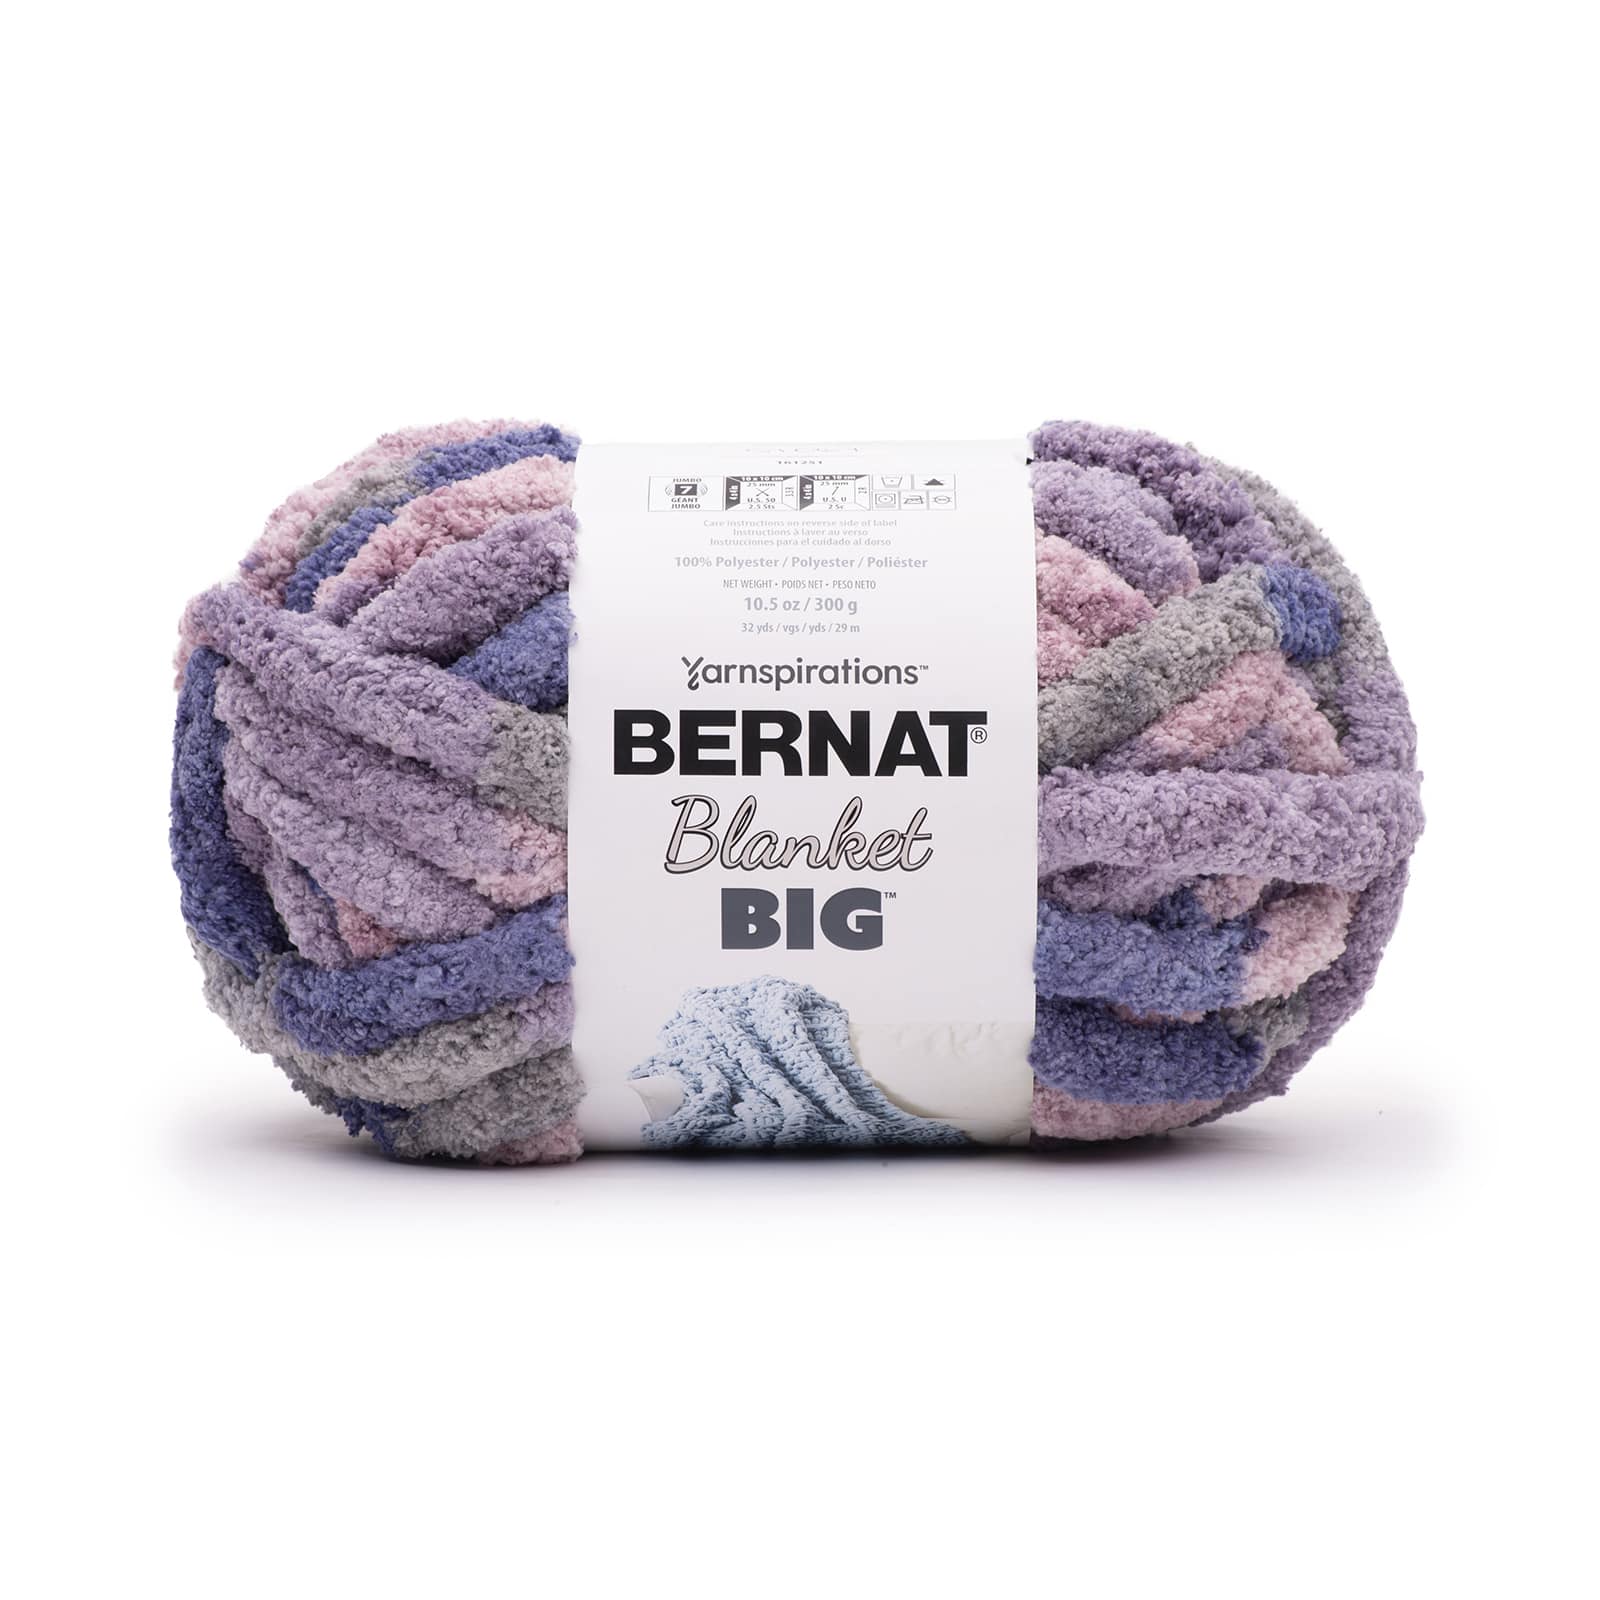 Bernat Blanket Shadow Purple Yarn - 2 Pack of 300g/10.5oz - Polyester - 6  Super Bulky - 220 Yards - Knitting/Crochet